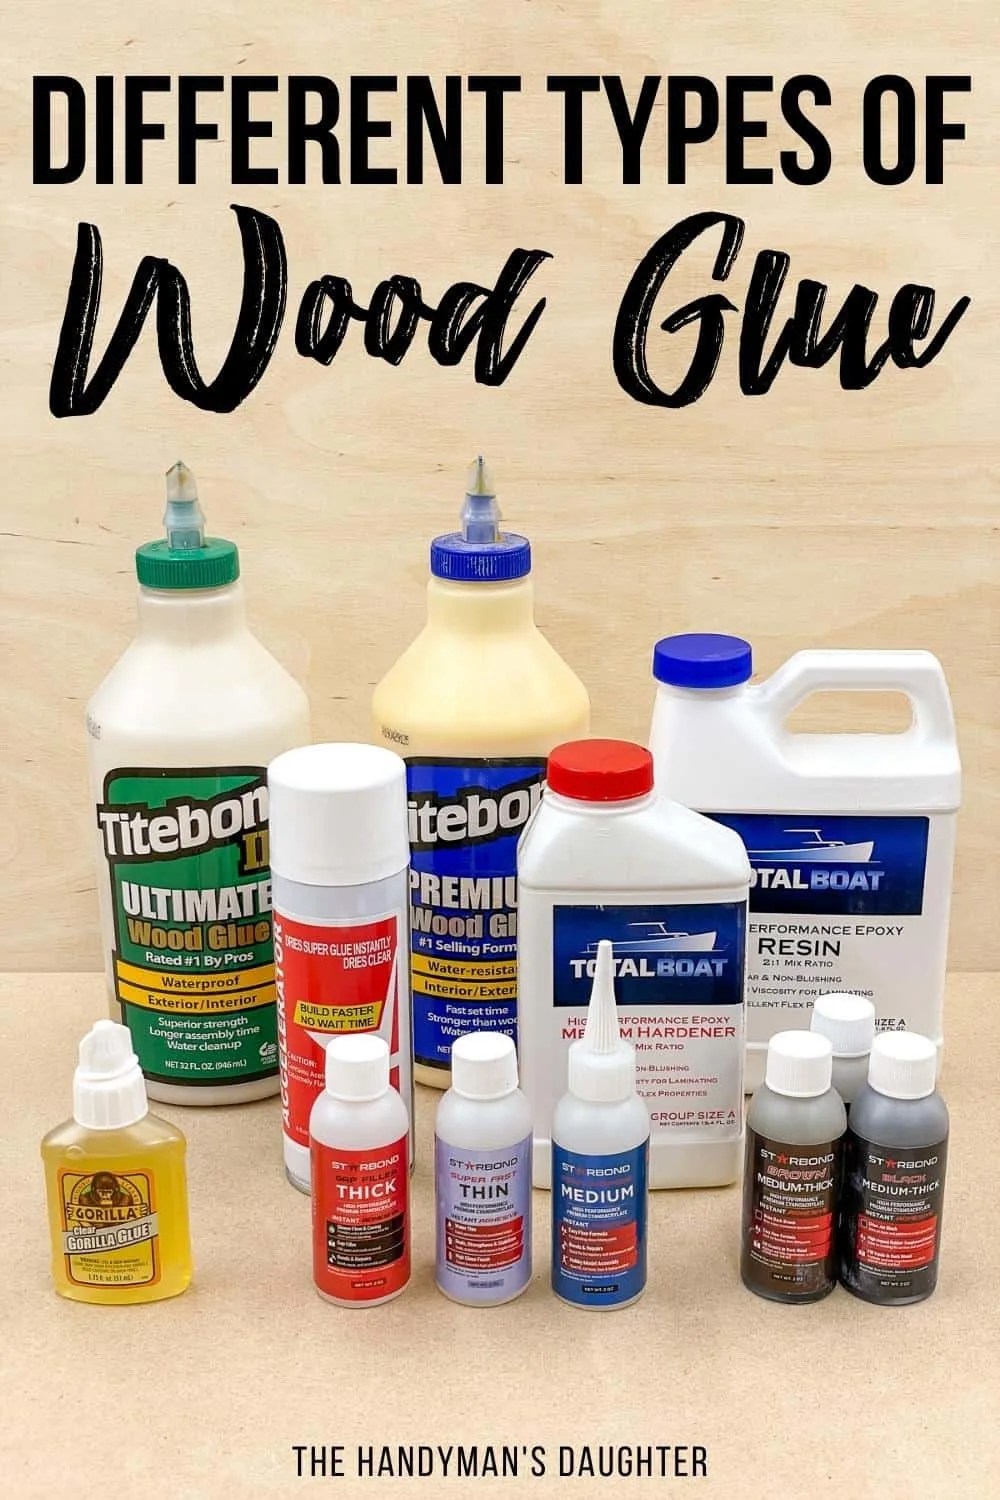 Liquid Nails Vs Wood Glue: The Ultimate Adhesive Showdown